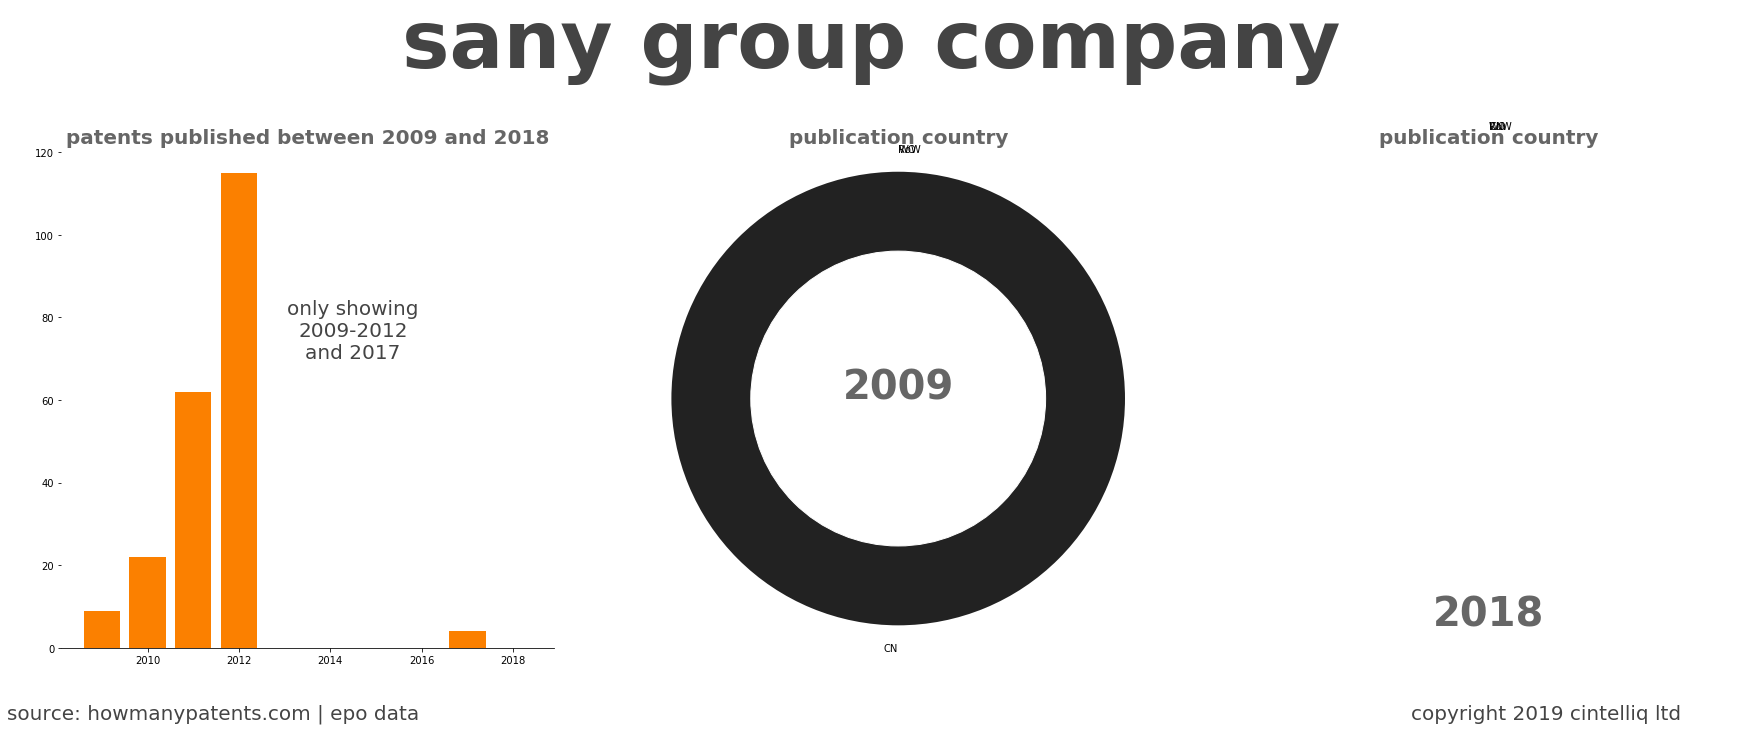 summary of patents for Sany Group Company